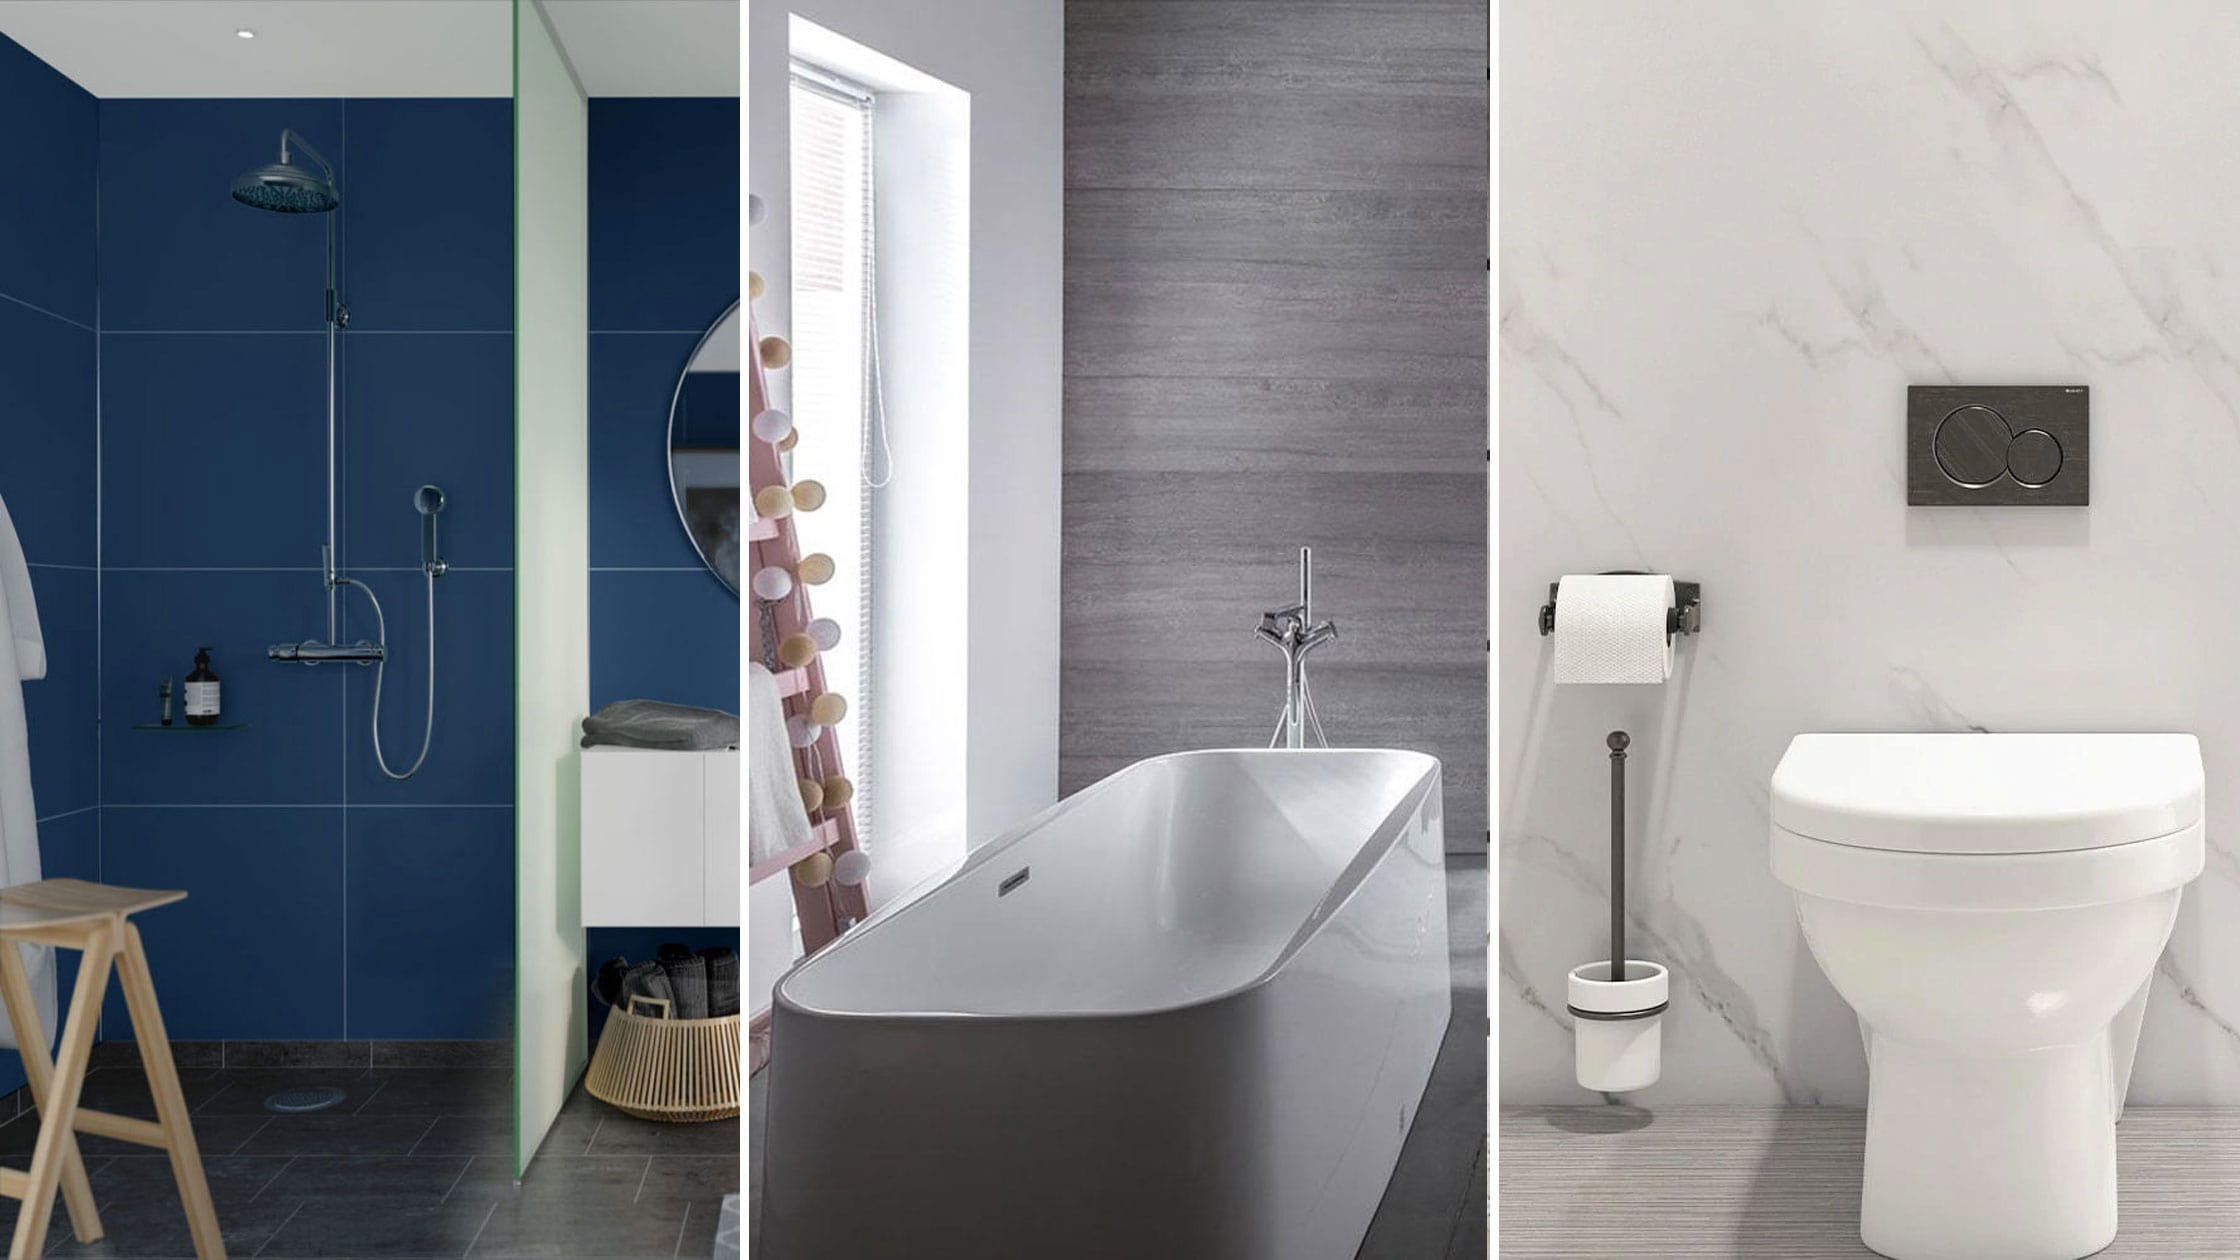 Bathroom Wall Panelling: Top Tips